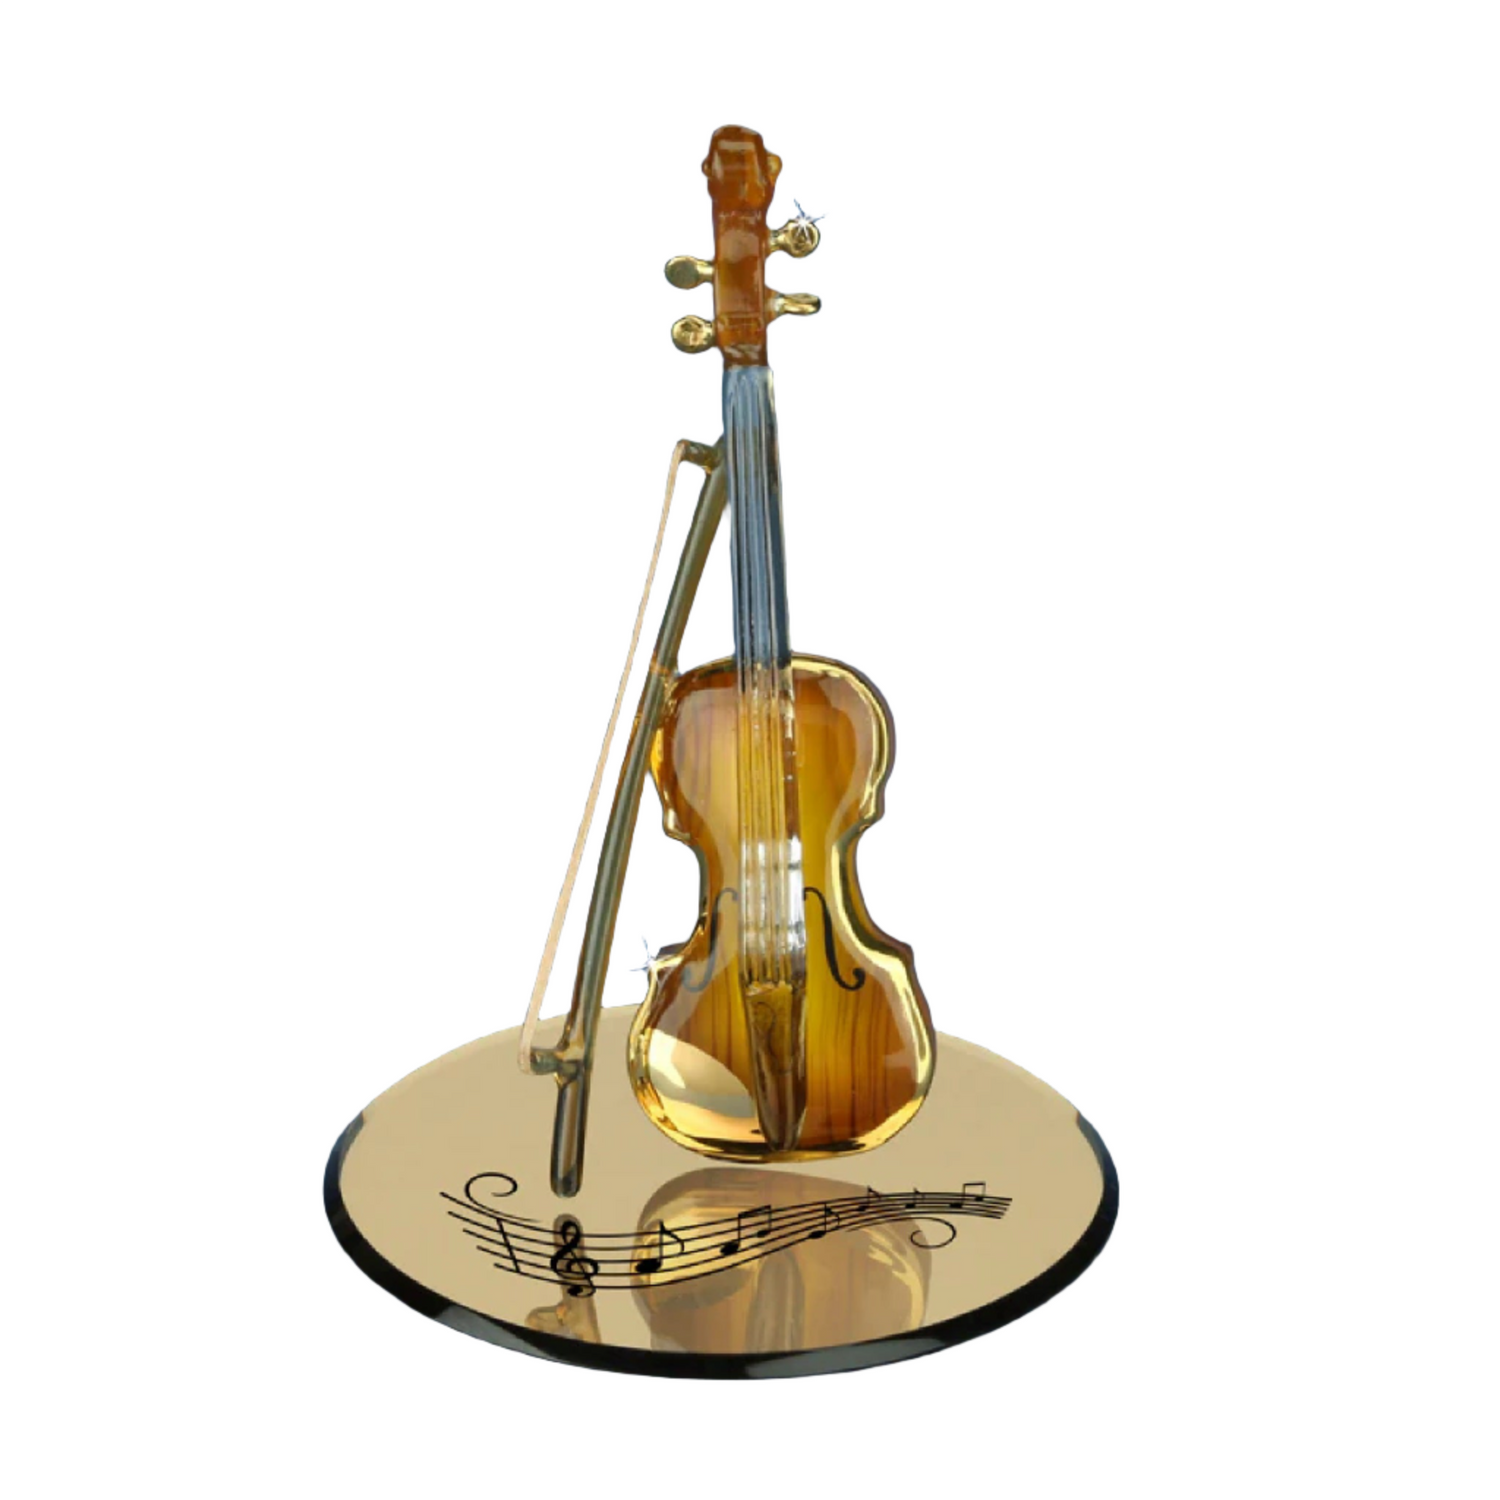 Glass Baron Gold Violin Figurine